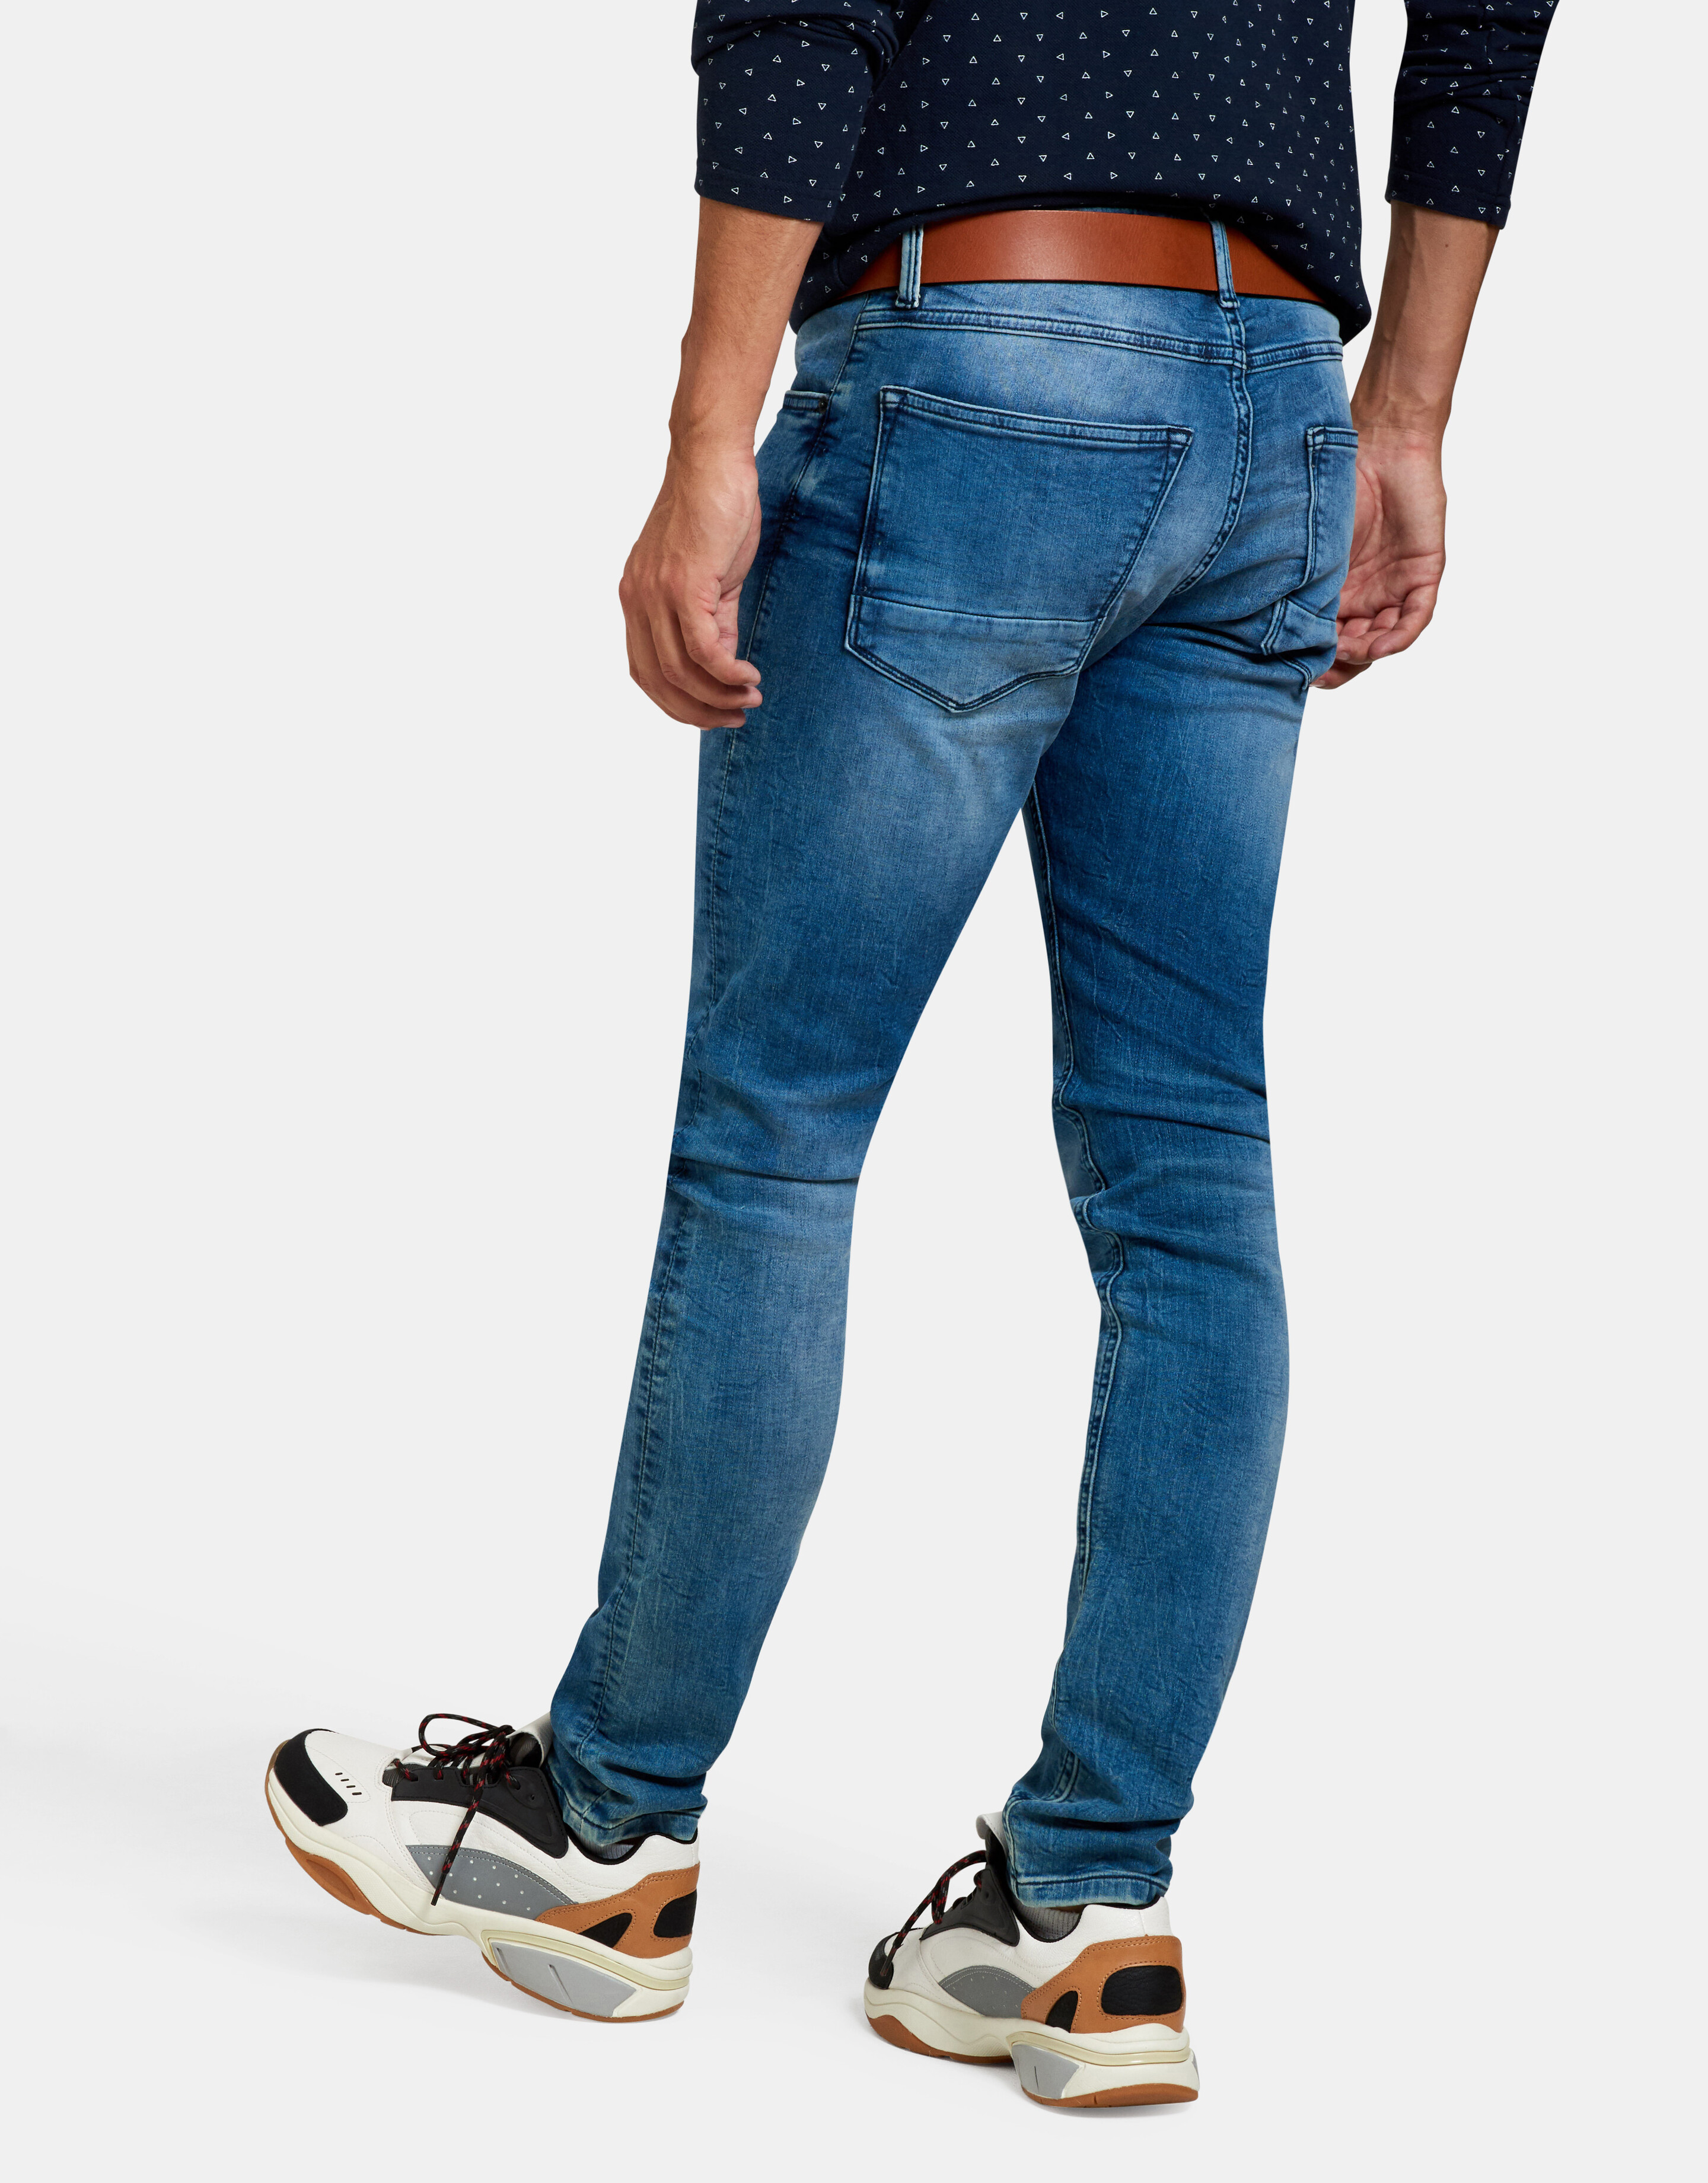 Leroy Skinny Gym Jeans L34 Refill